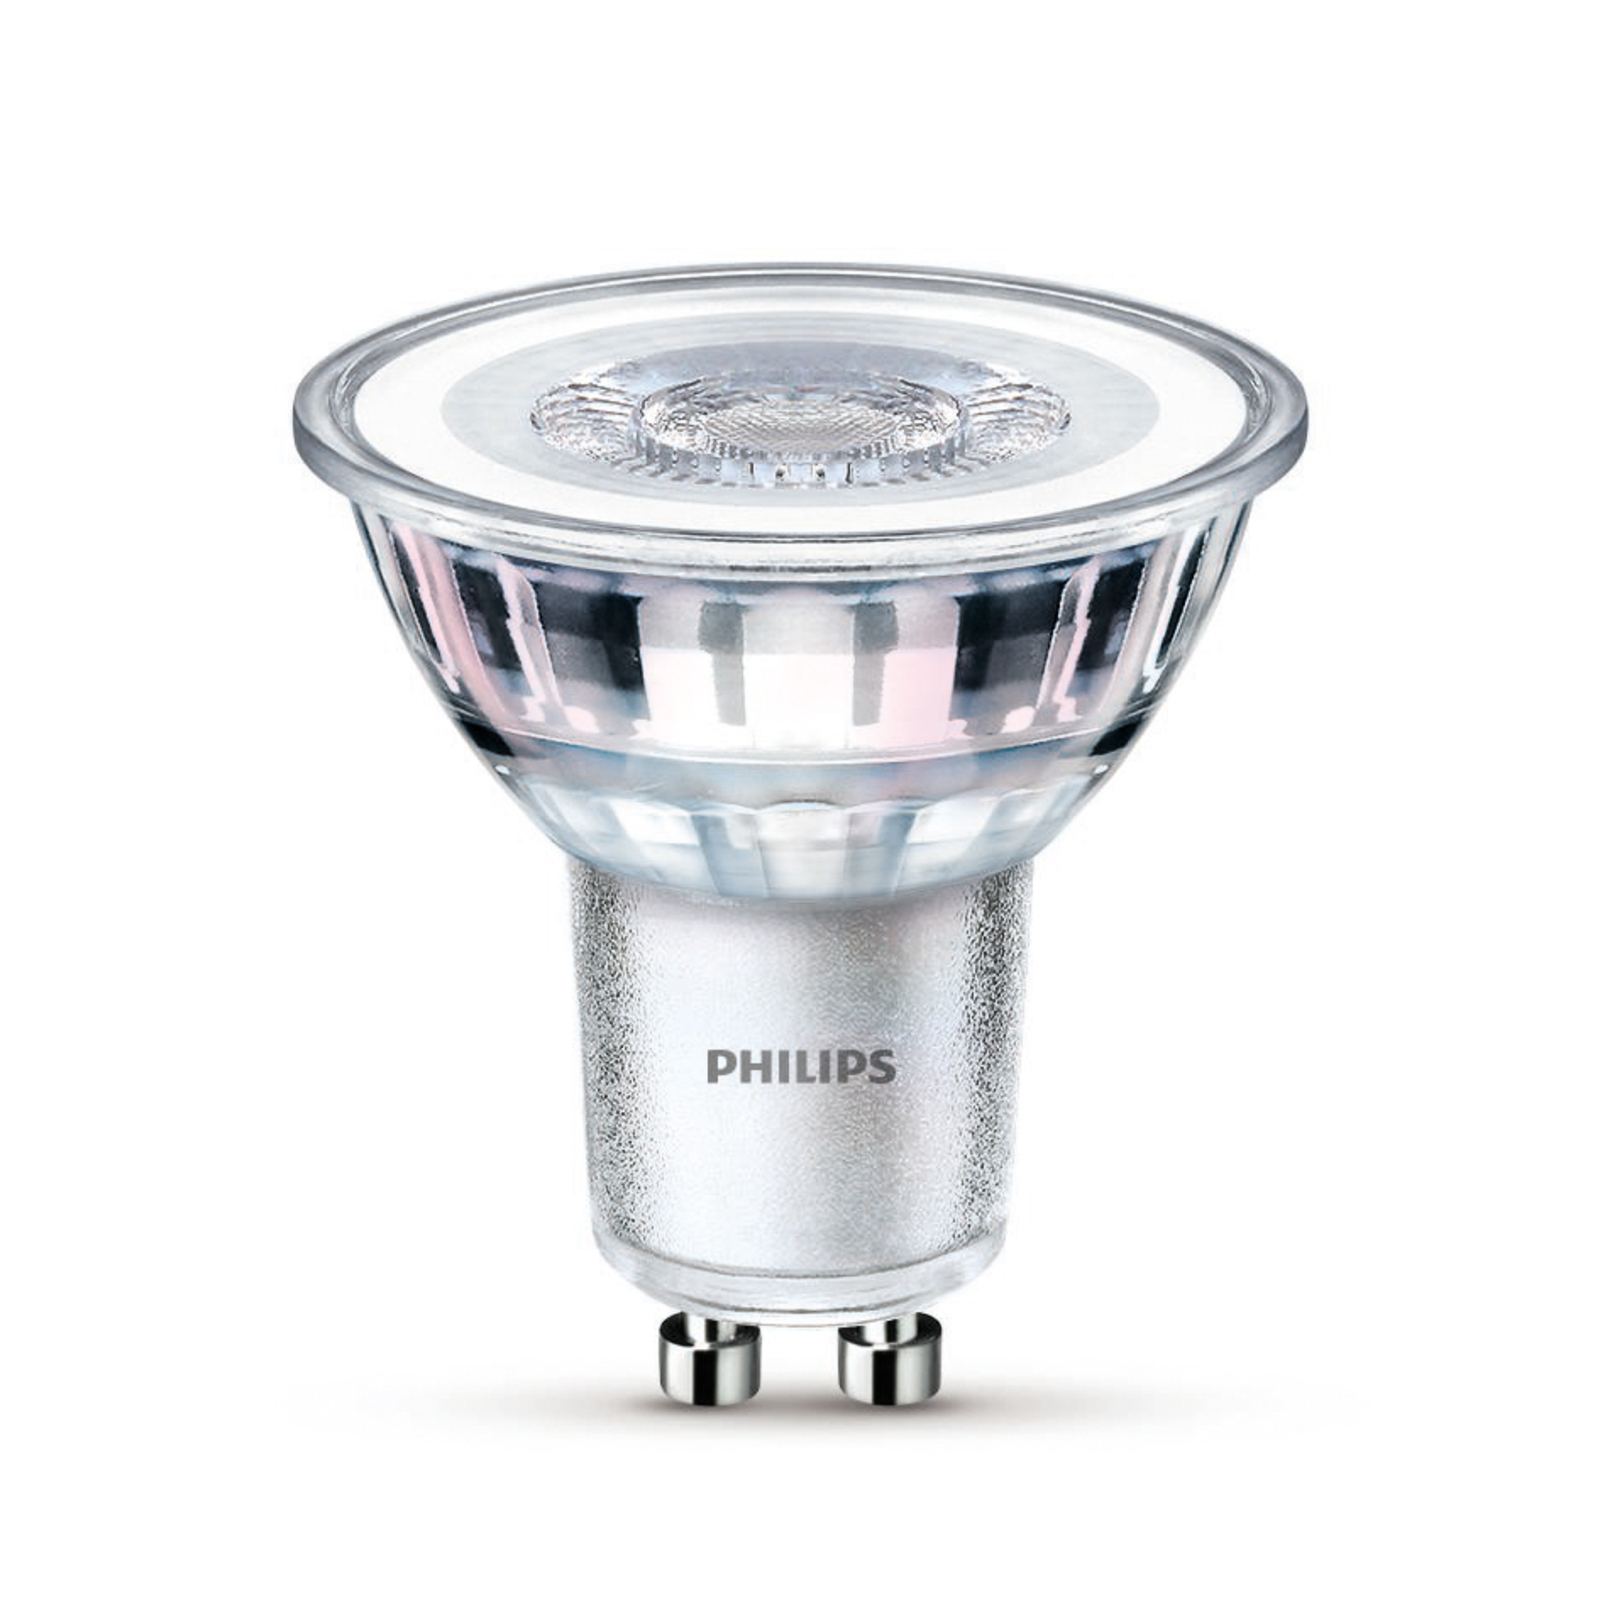 Philips LED GU10 3,5W 255lm 827 číra 36° 3 ks